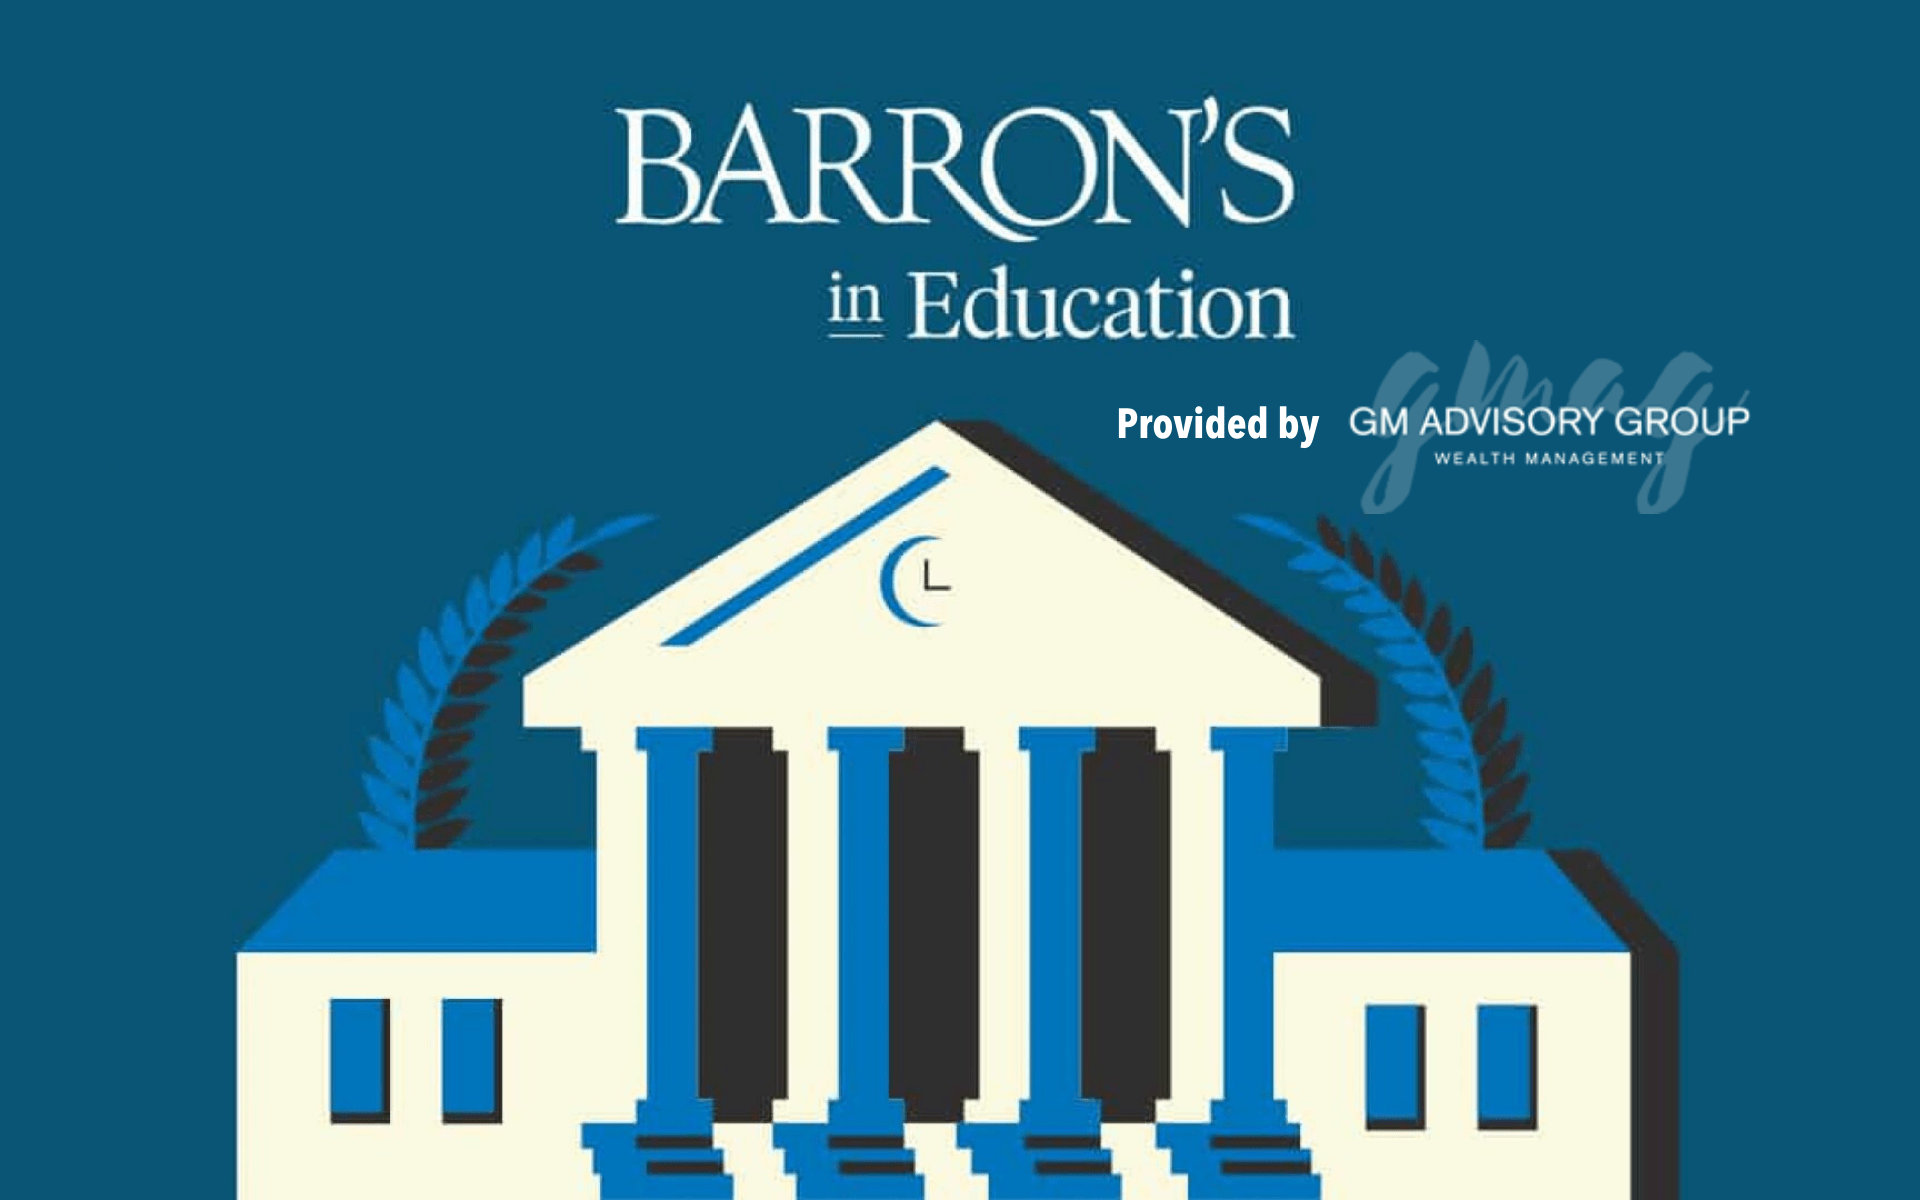 School of Business Announces Strategic Partnership with GM Advisory Group, Barron’s in Education Program